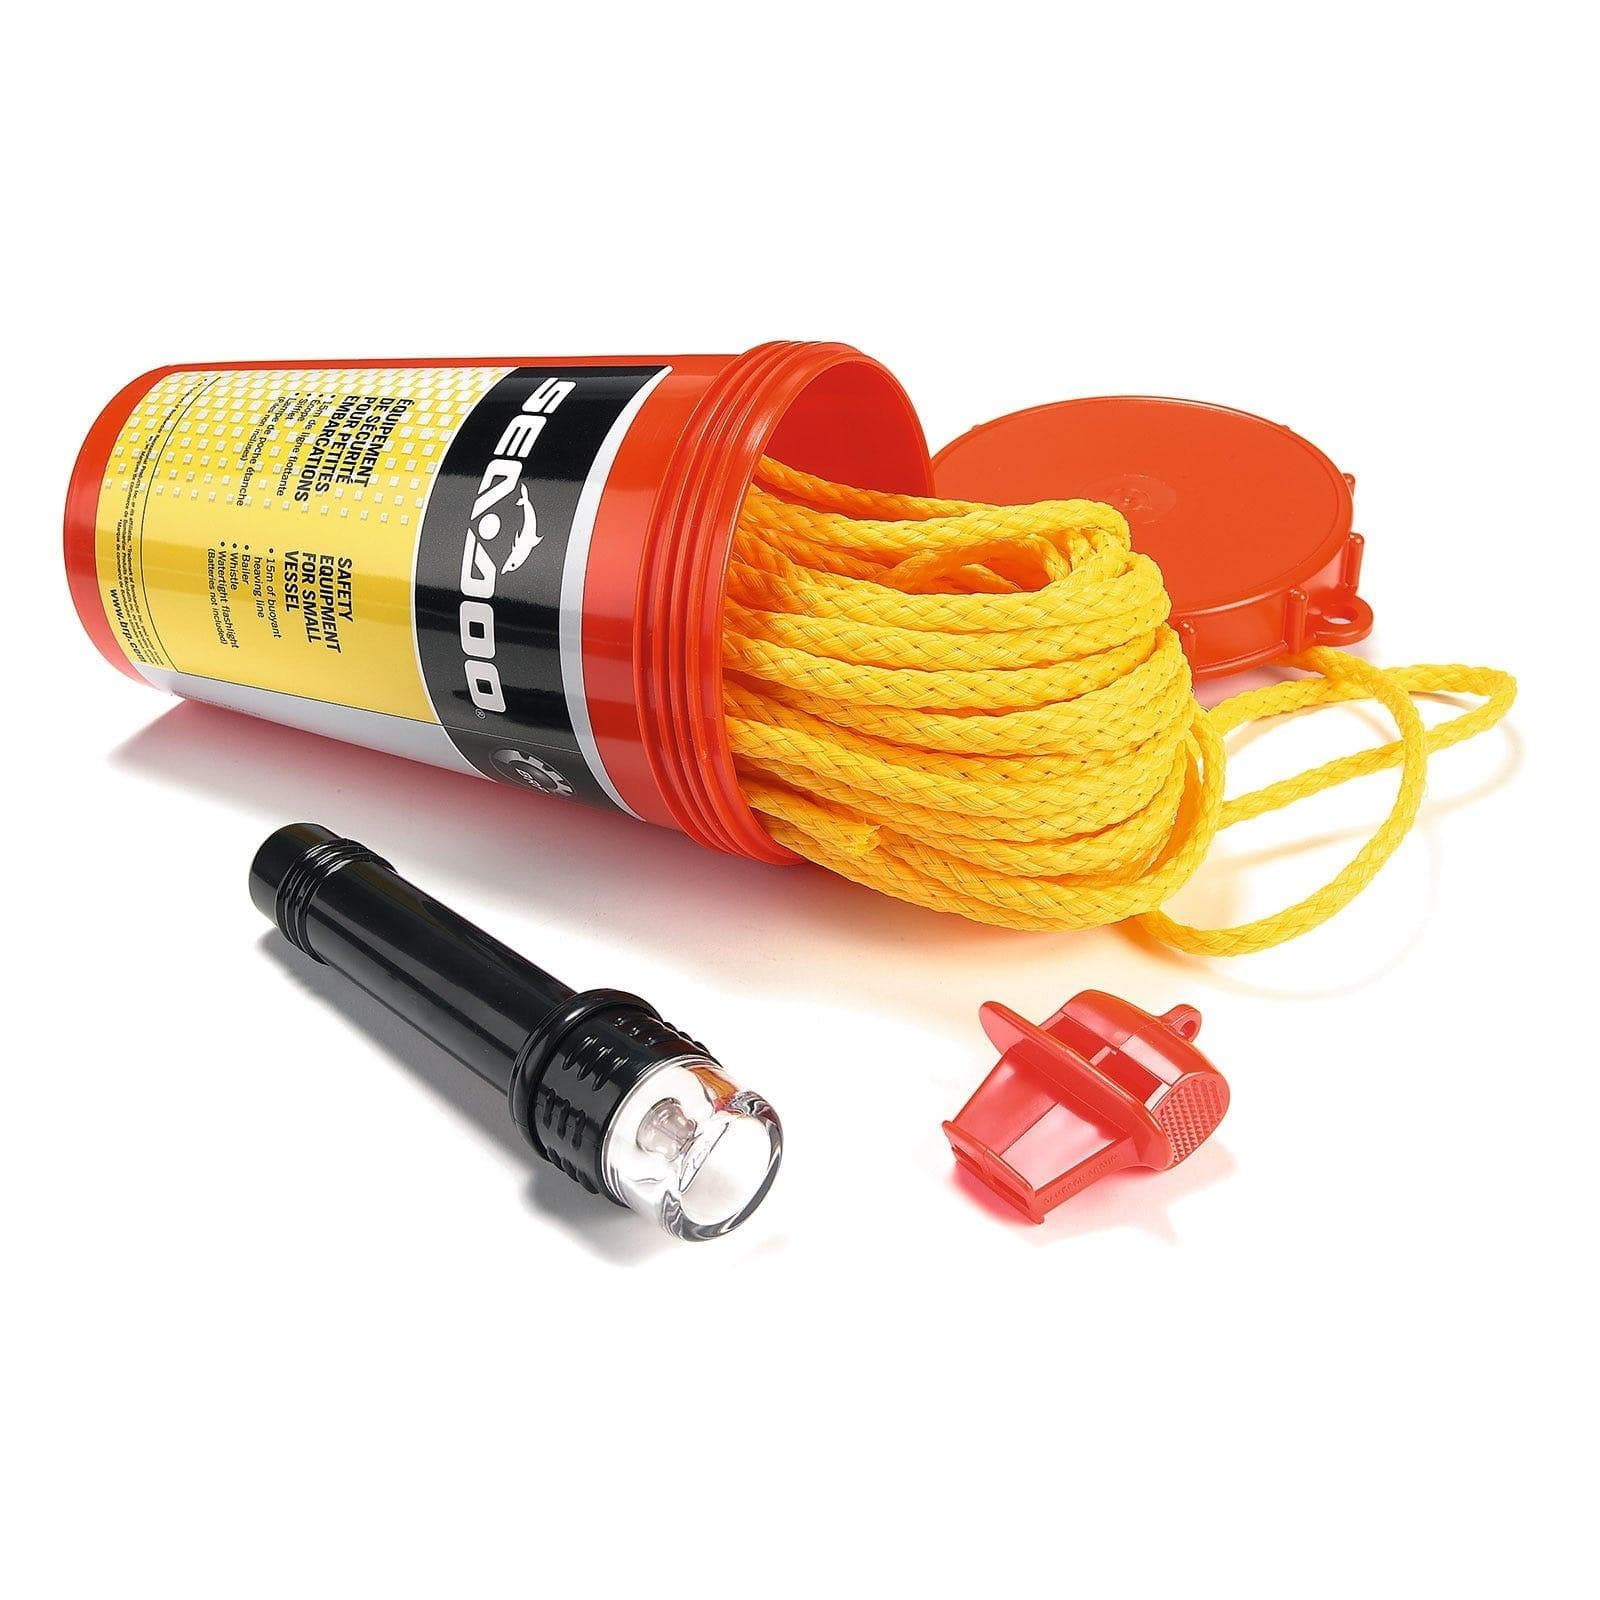 Safety Equipment Kit